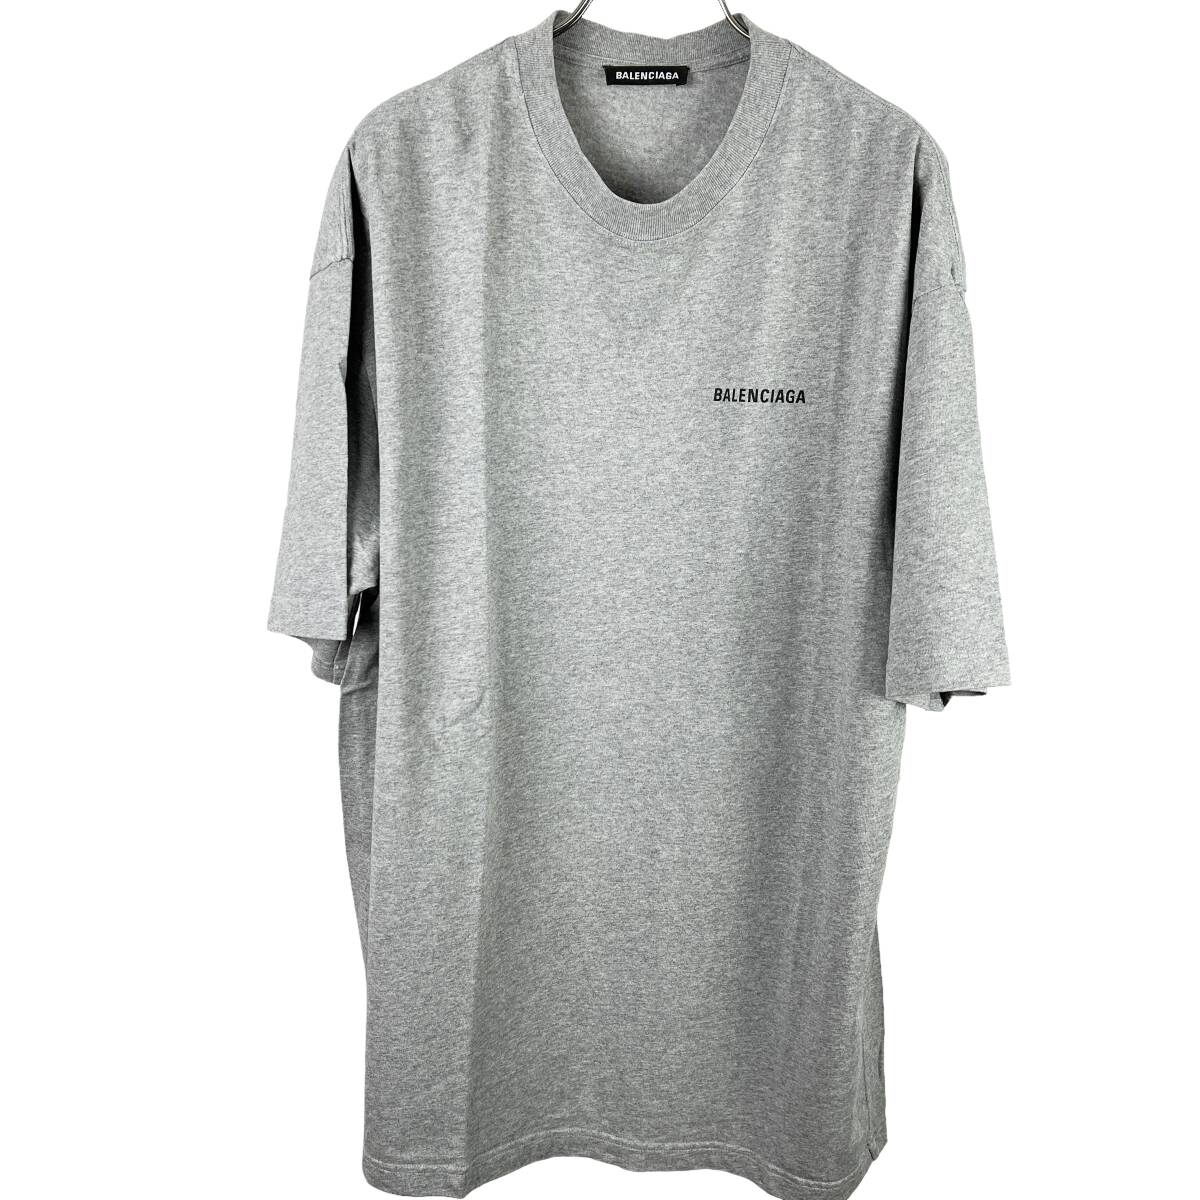 Balenciaga(バレンシアガ) Front Back LOGO Shortsleeve T Shirt (grey)